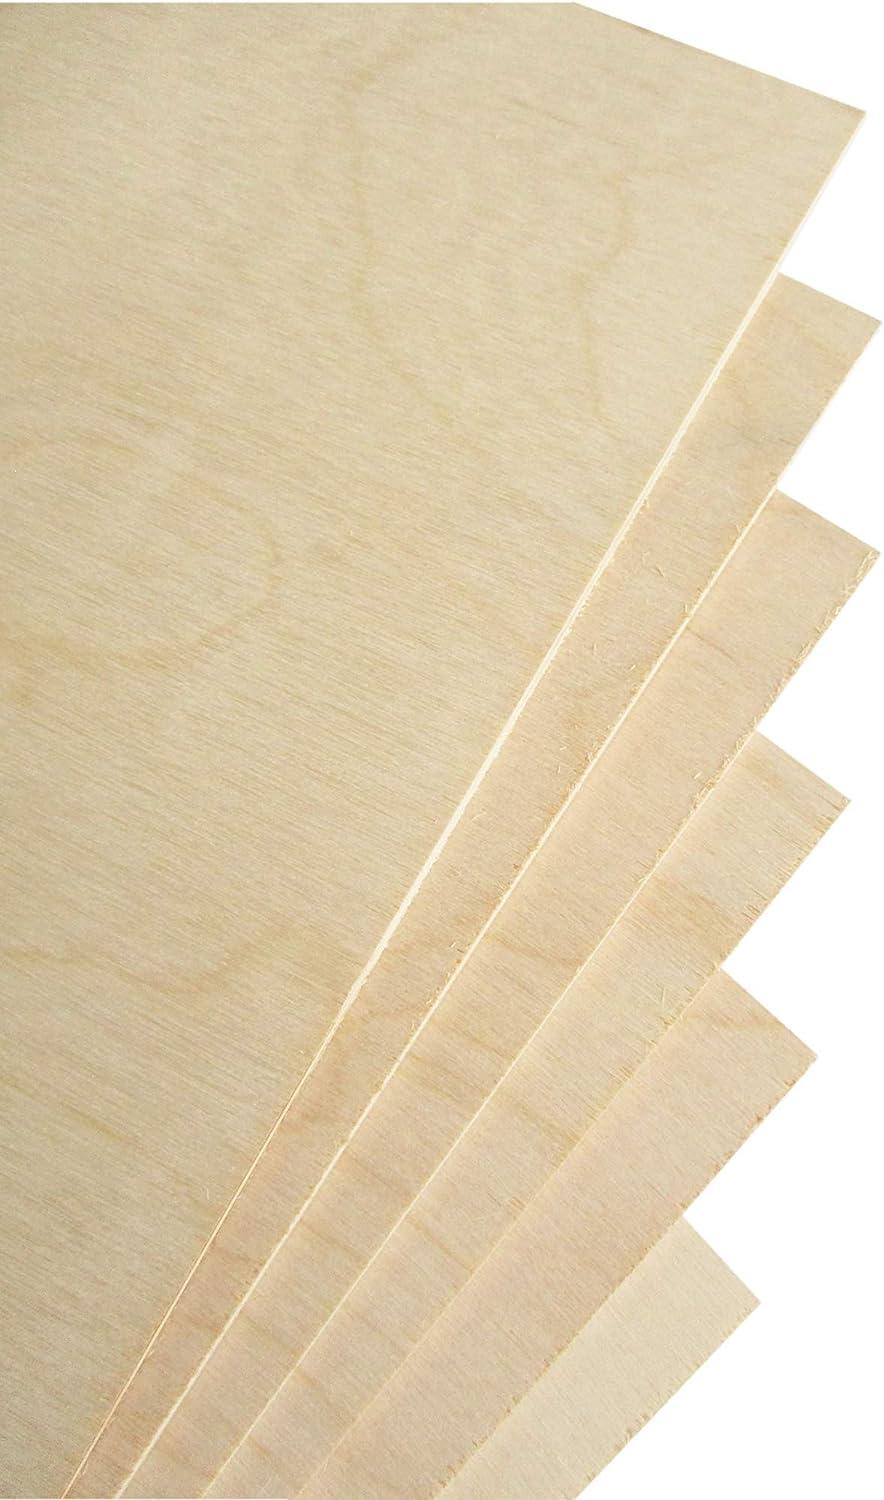 Premium Baltic Birch Plywood 3 mm 1/8x 12x 18 Thin Wood 6 Flat